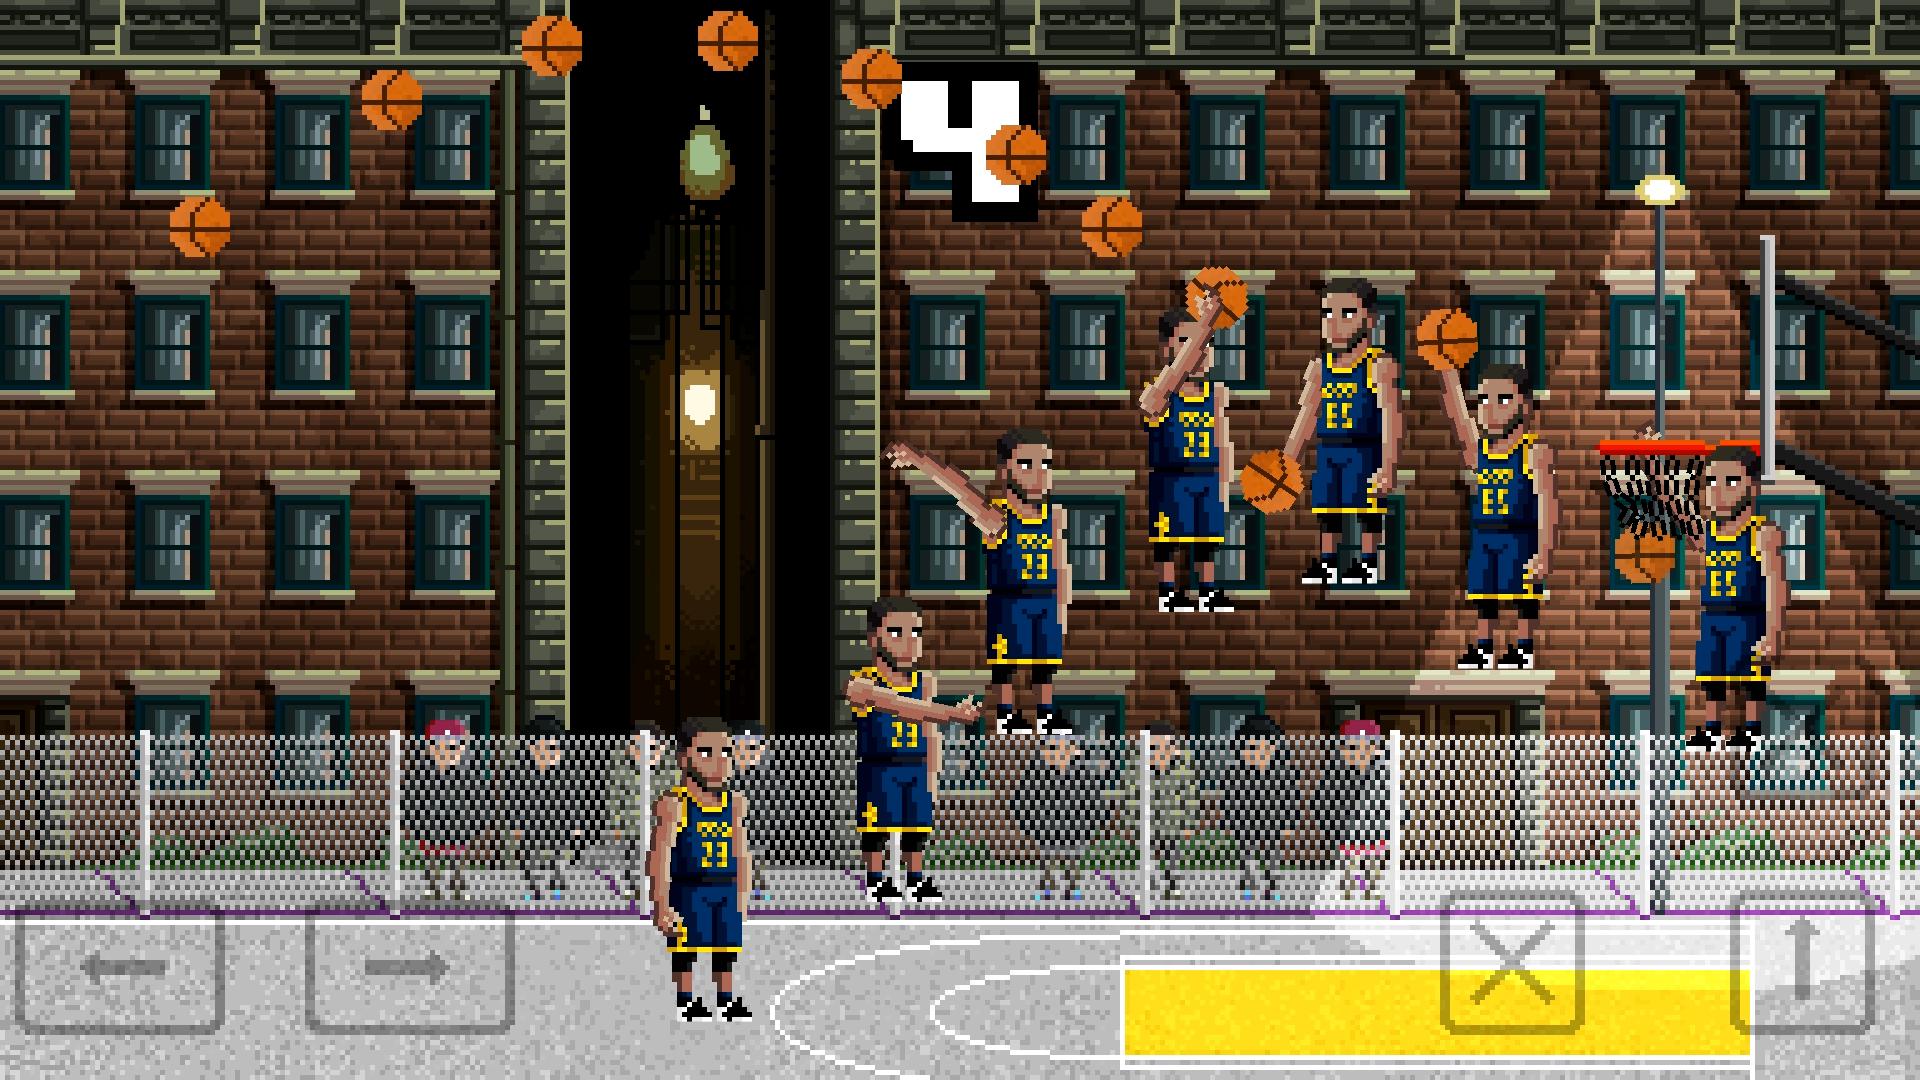 Dunkey Basketball